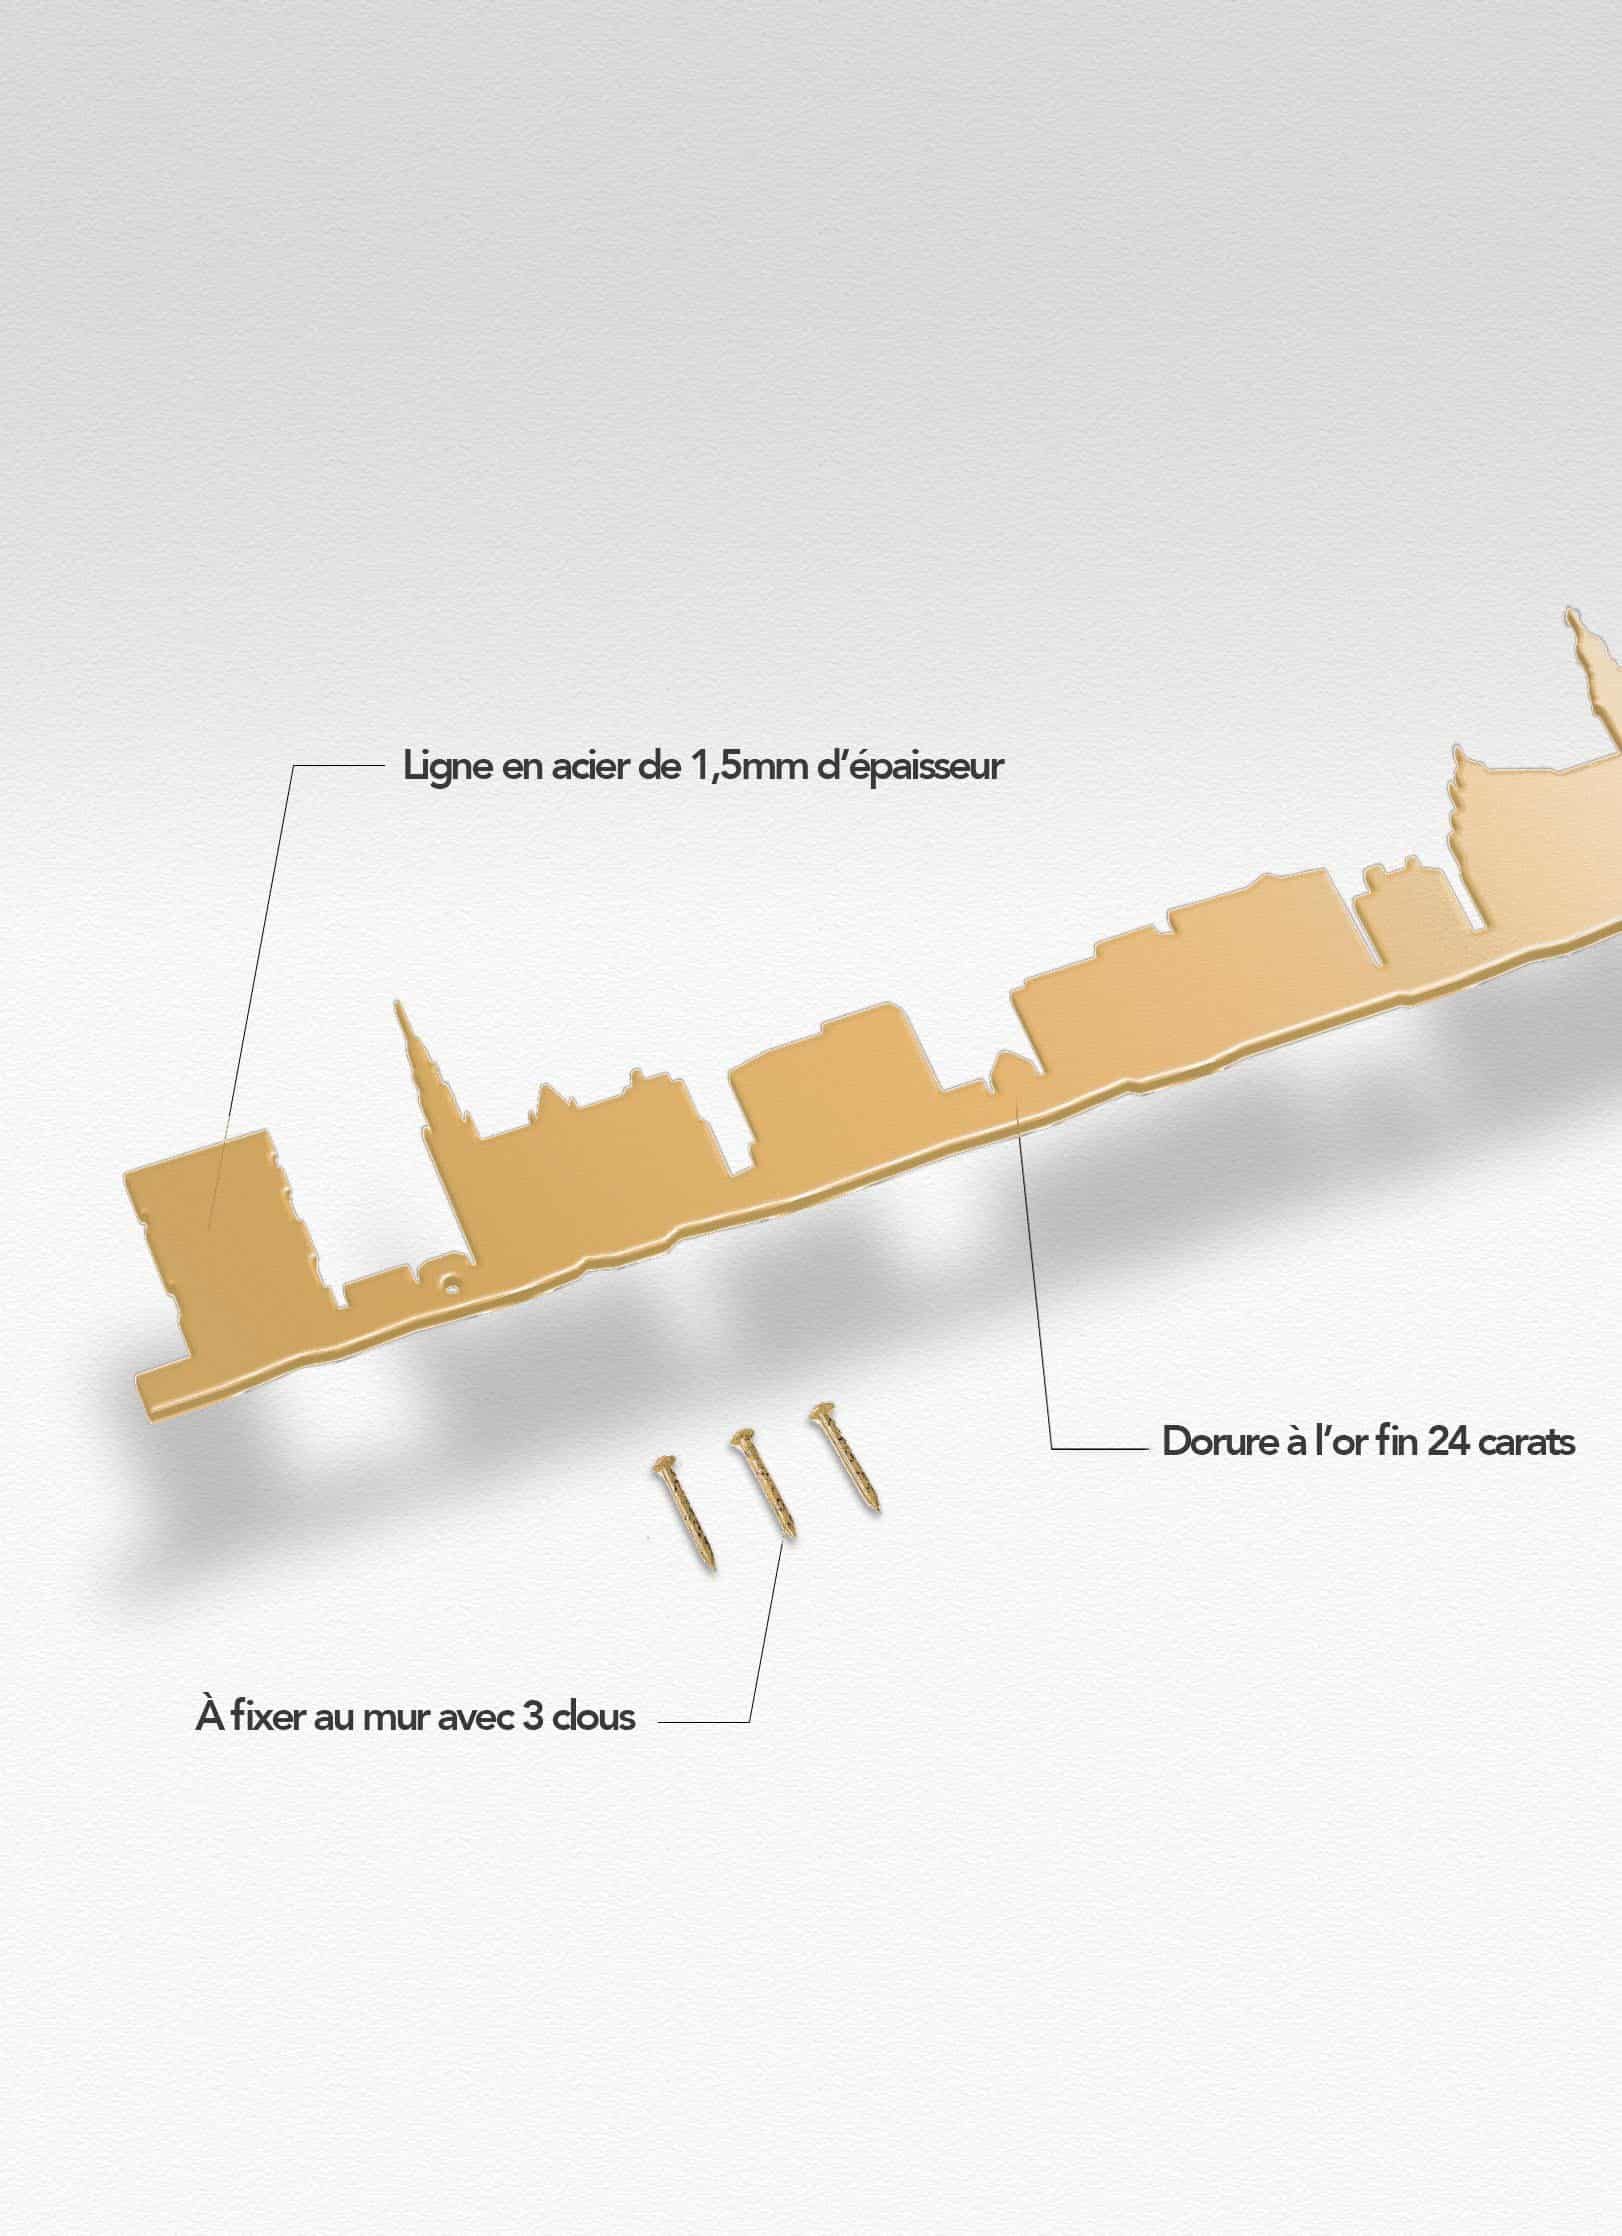 Presentation of the skyline of Anvers doré